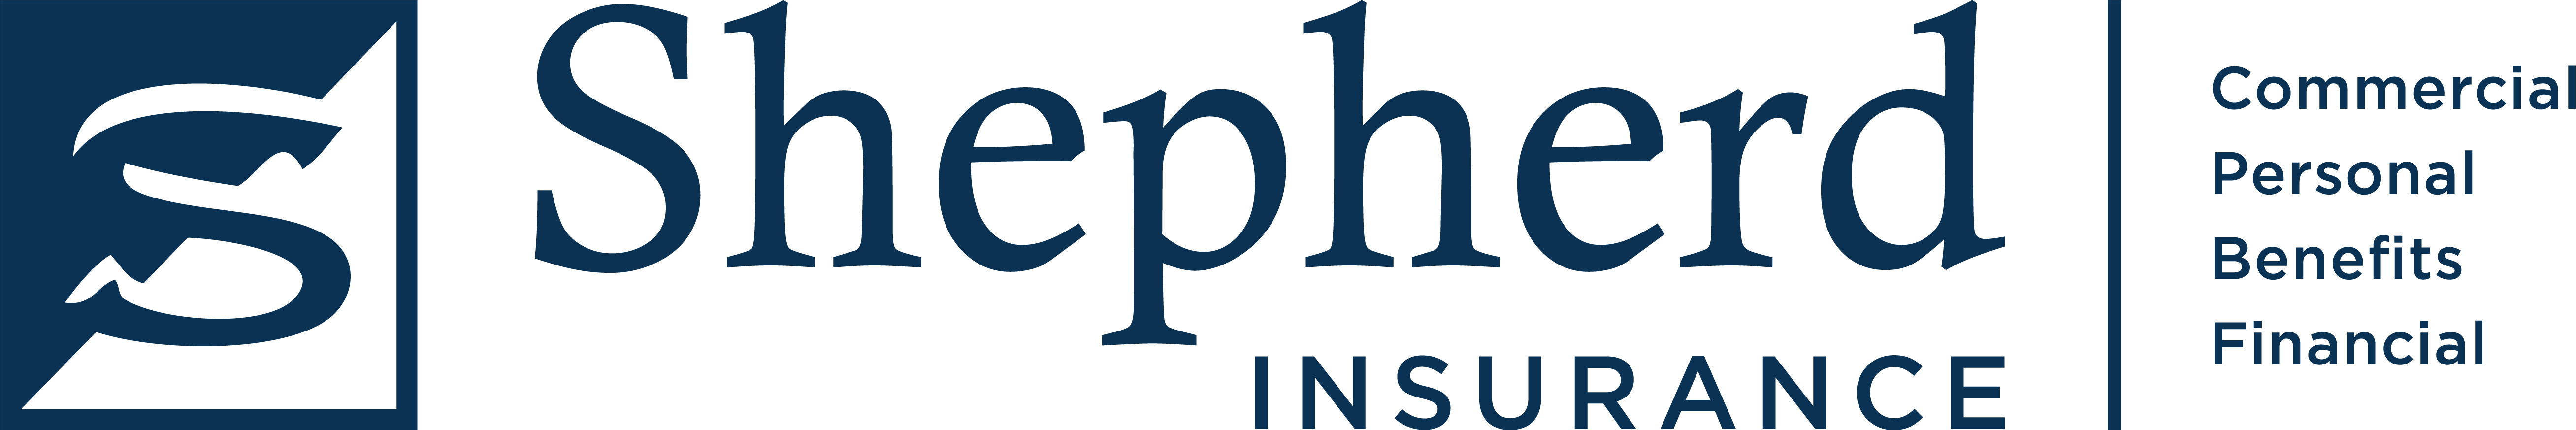 Shepherd Insurance